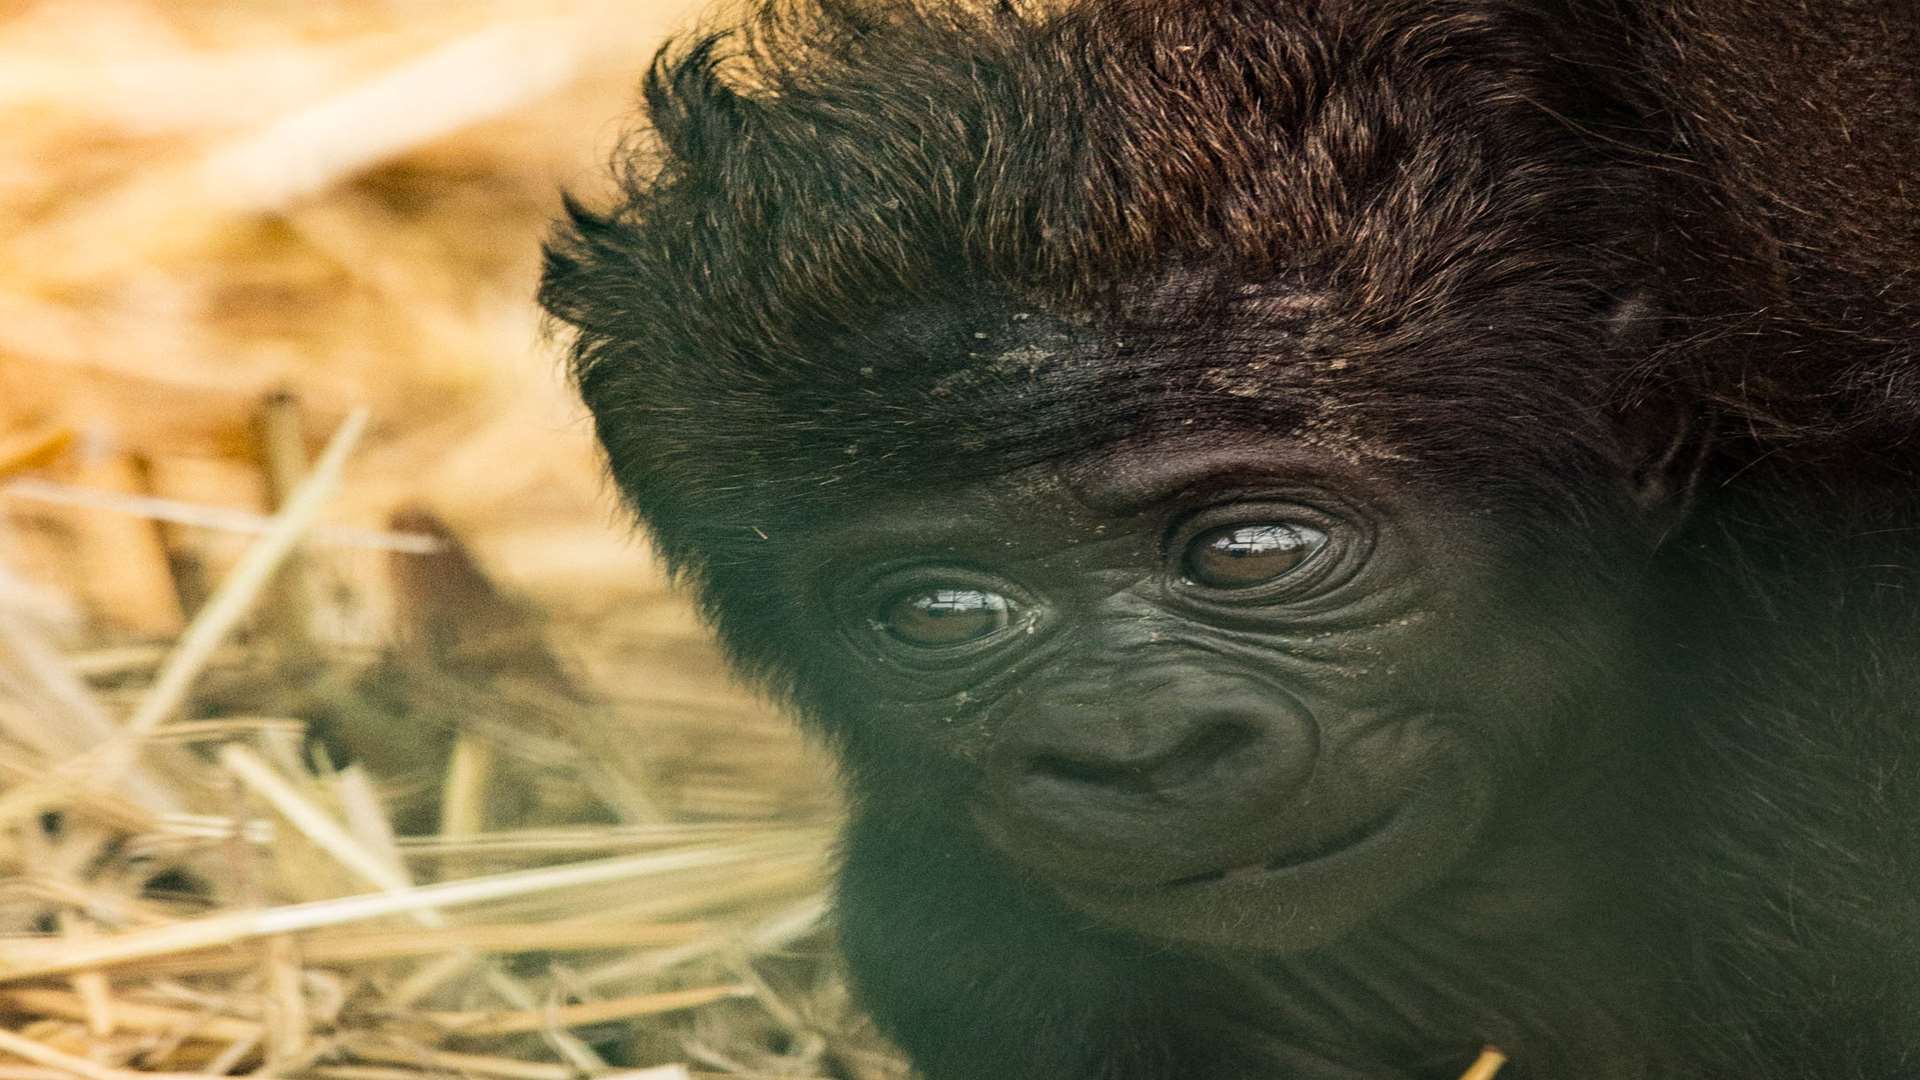 A baby gorilla at Howletts Wild Animal Park near Canterbury